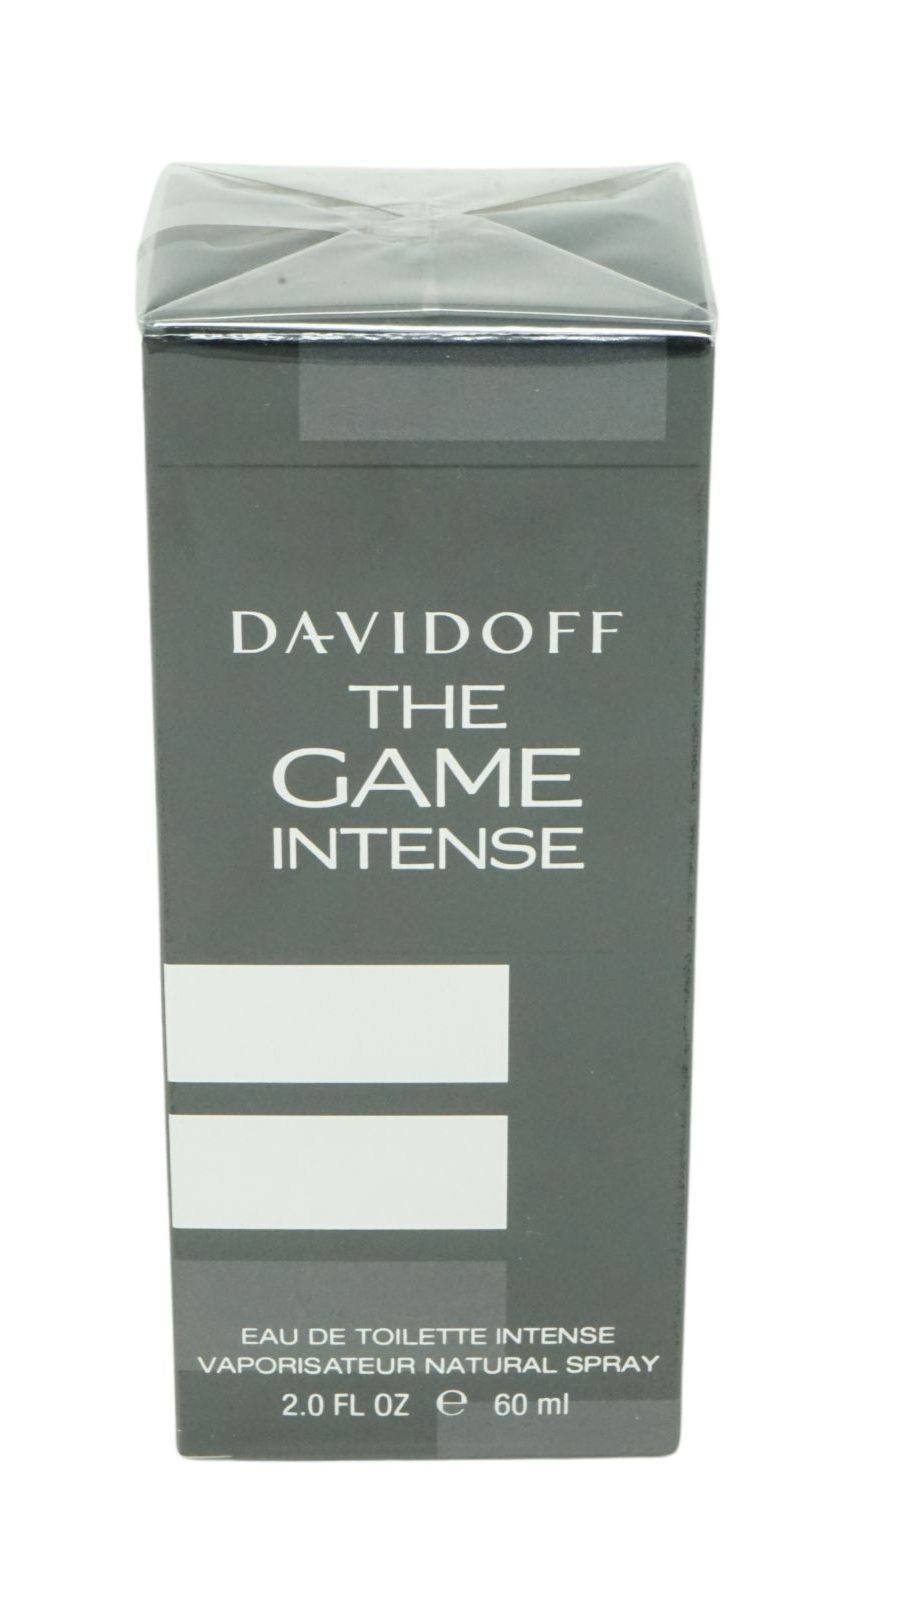 DAVIDOFF Eau de Toilette Davidoff Eau de 60ml Intense Game Toilette The